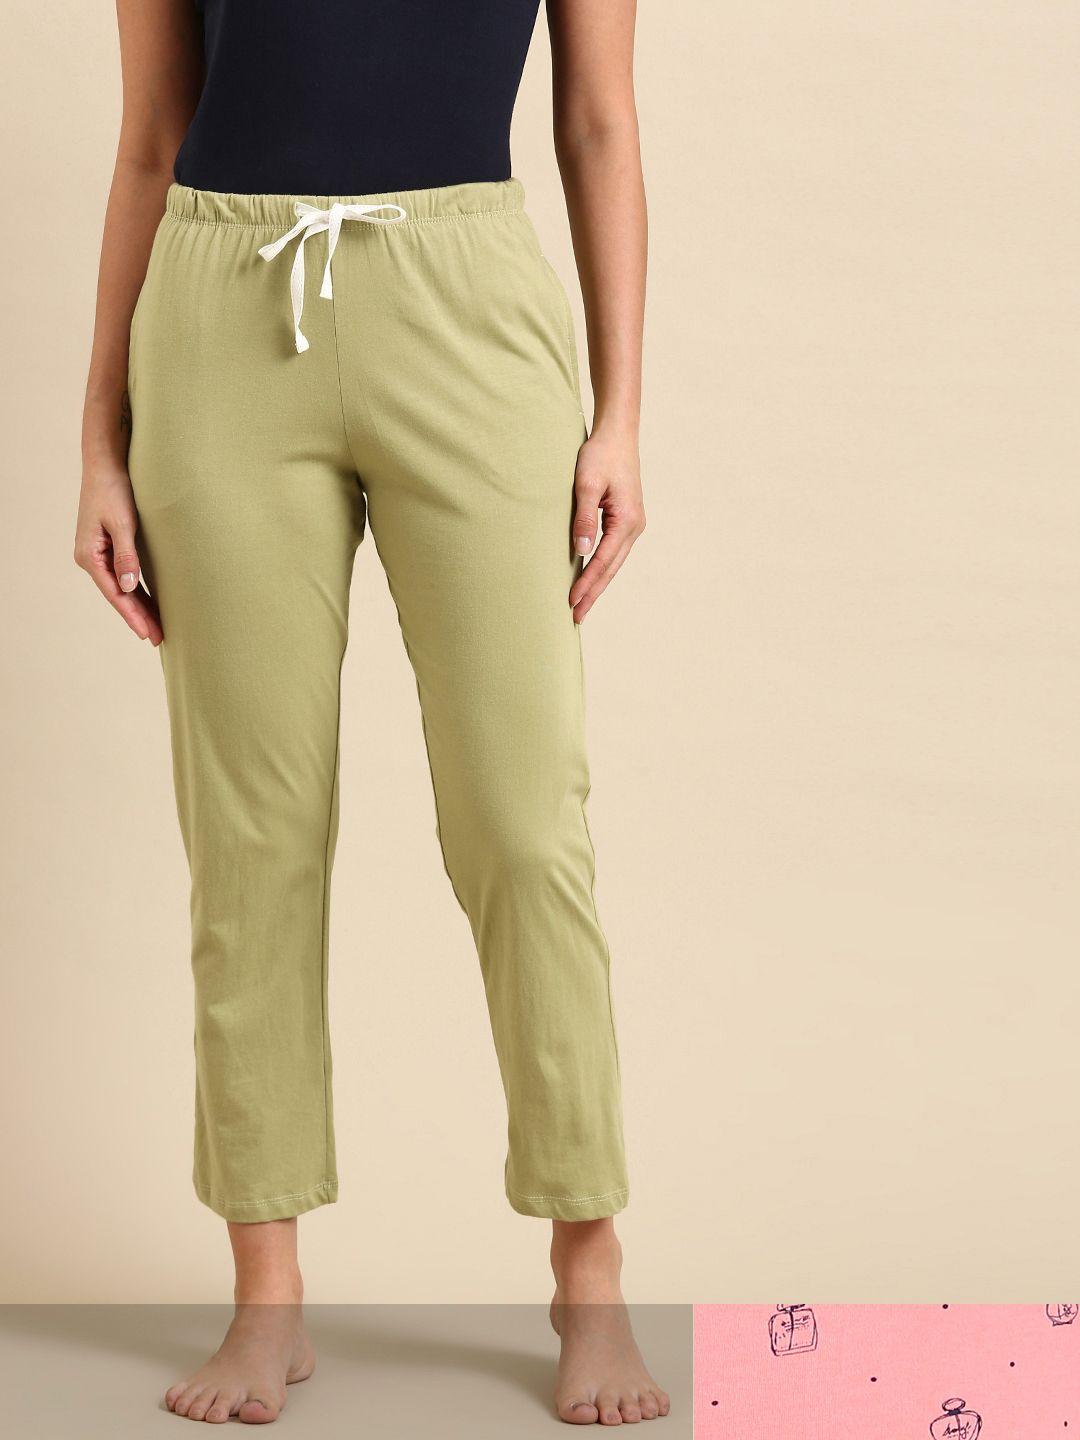 dreamz by pantaloons women pack of 2 green & peach printed lounge pants